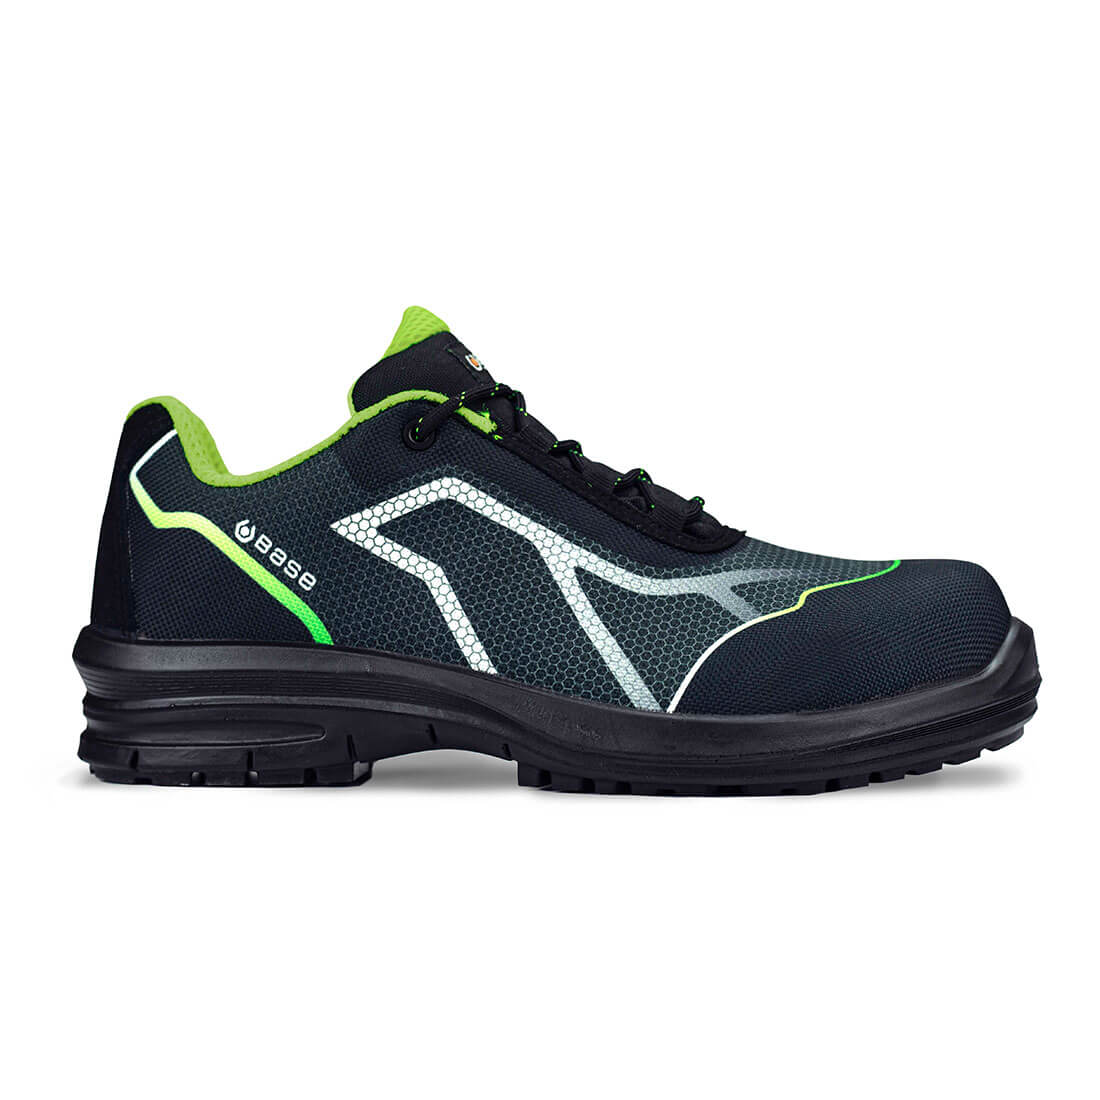 Base Oren S3 Toe Cap Work Safety Shoes Black/Green 1#colour_black-green